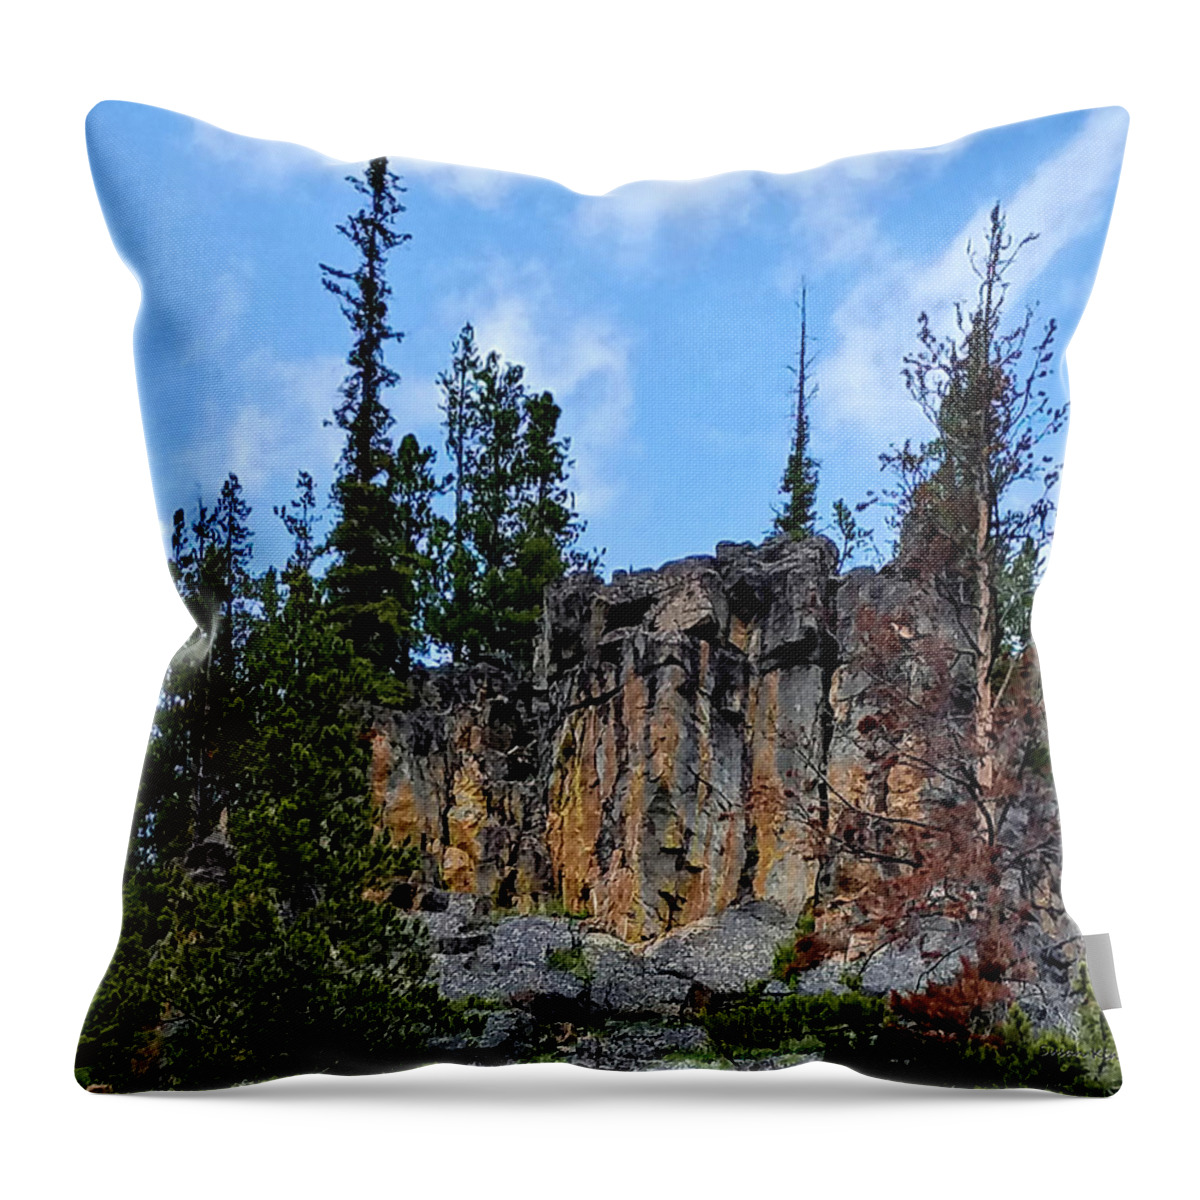 Kings Hill Throw Pillow featuring the digital art Rocks 3 by Susan Kinney